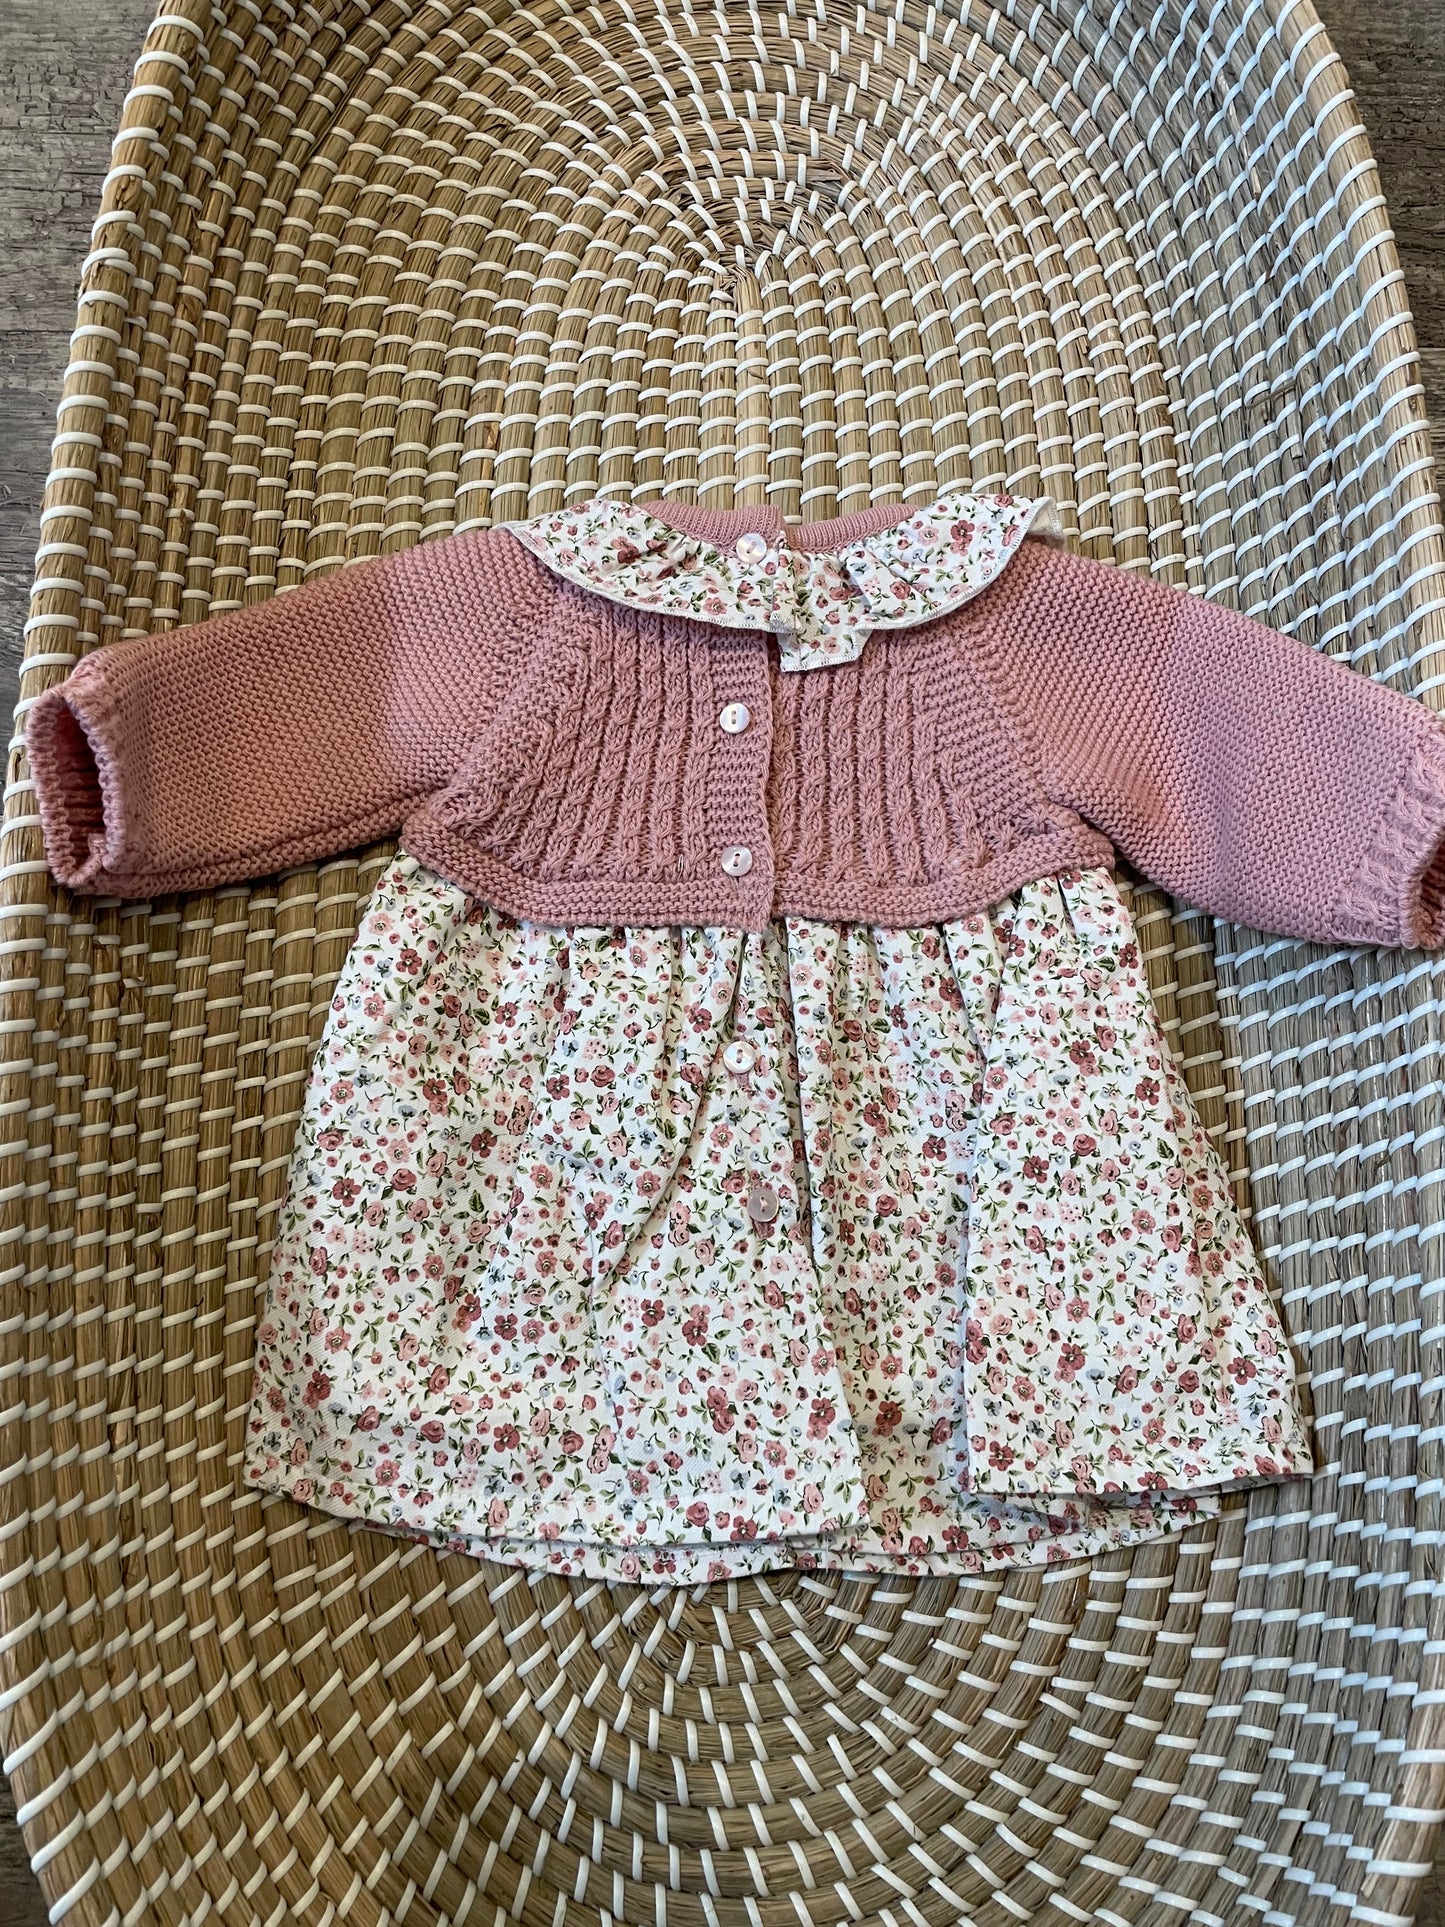 The pink half knit dress